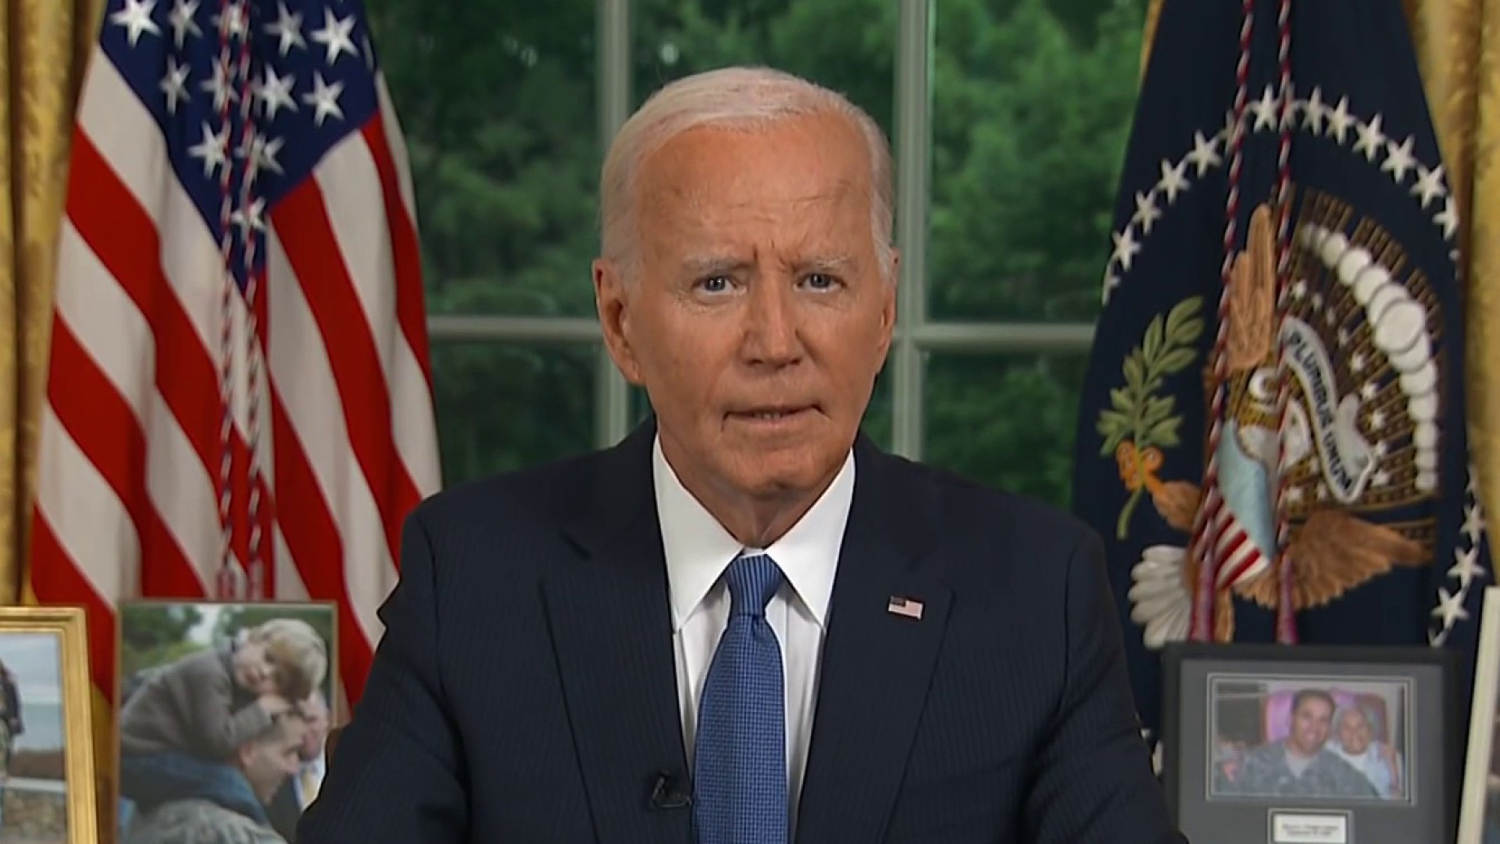 Watch President Biden's historic address on leaving the 2024 race